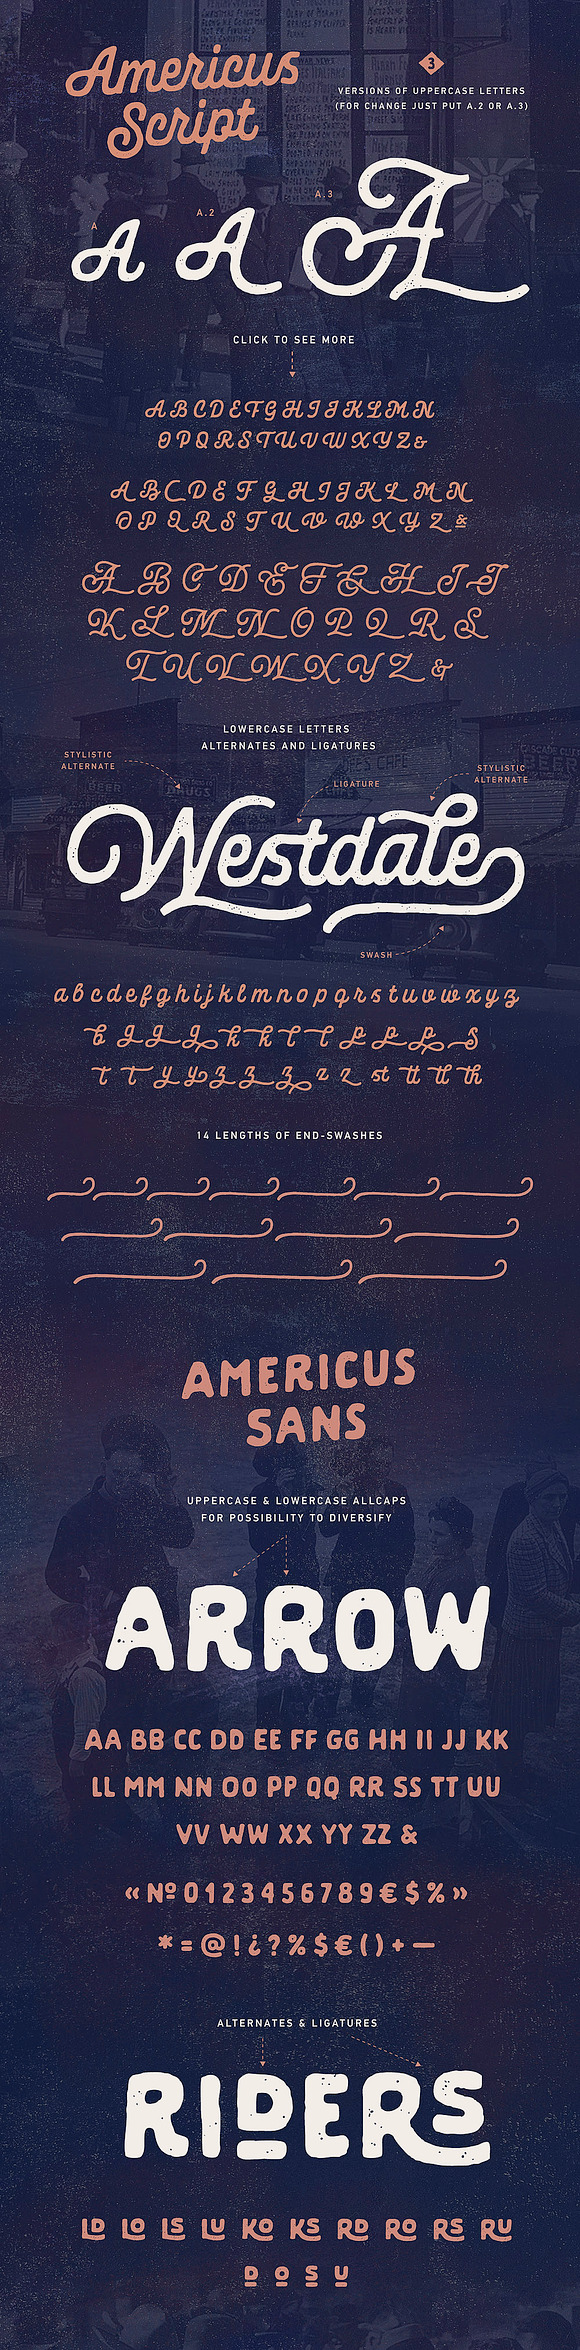 Americus Script & Sans in Retro Fonts - product preview 8